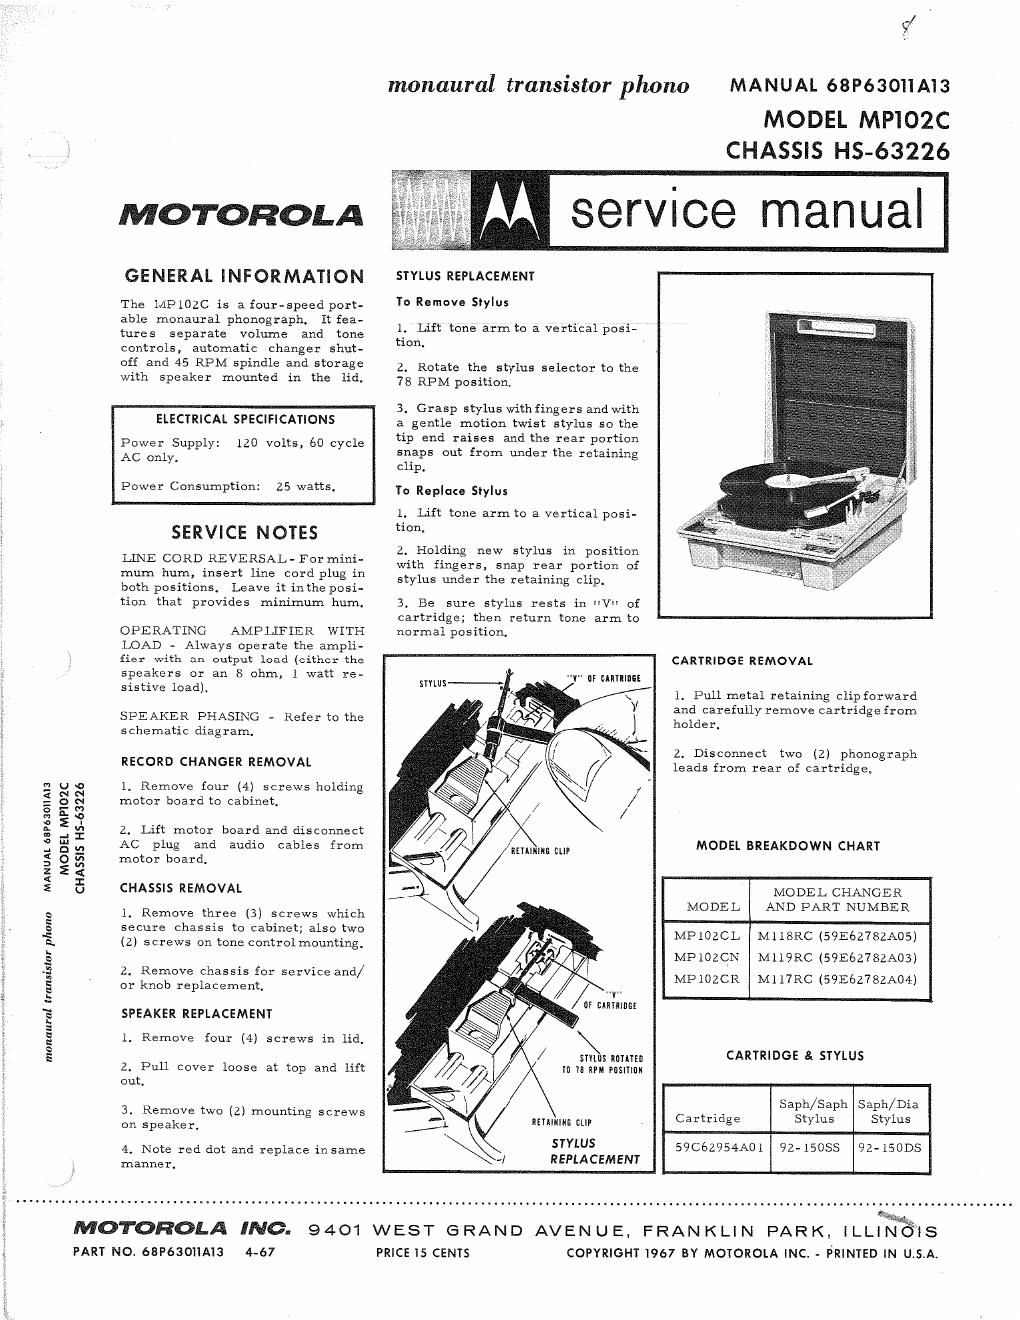 motorola mp 102 c service manual